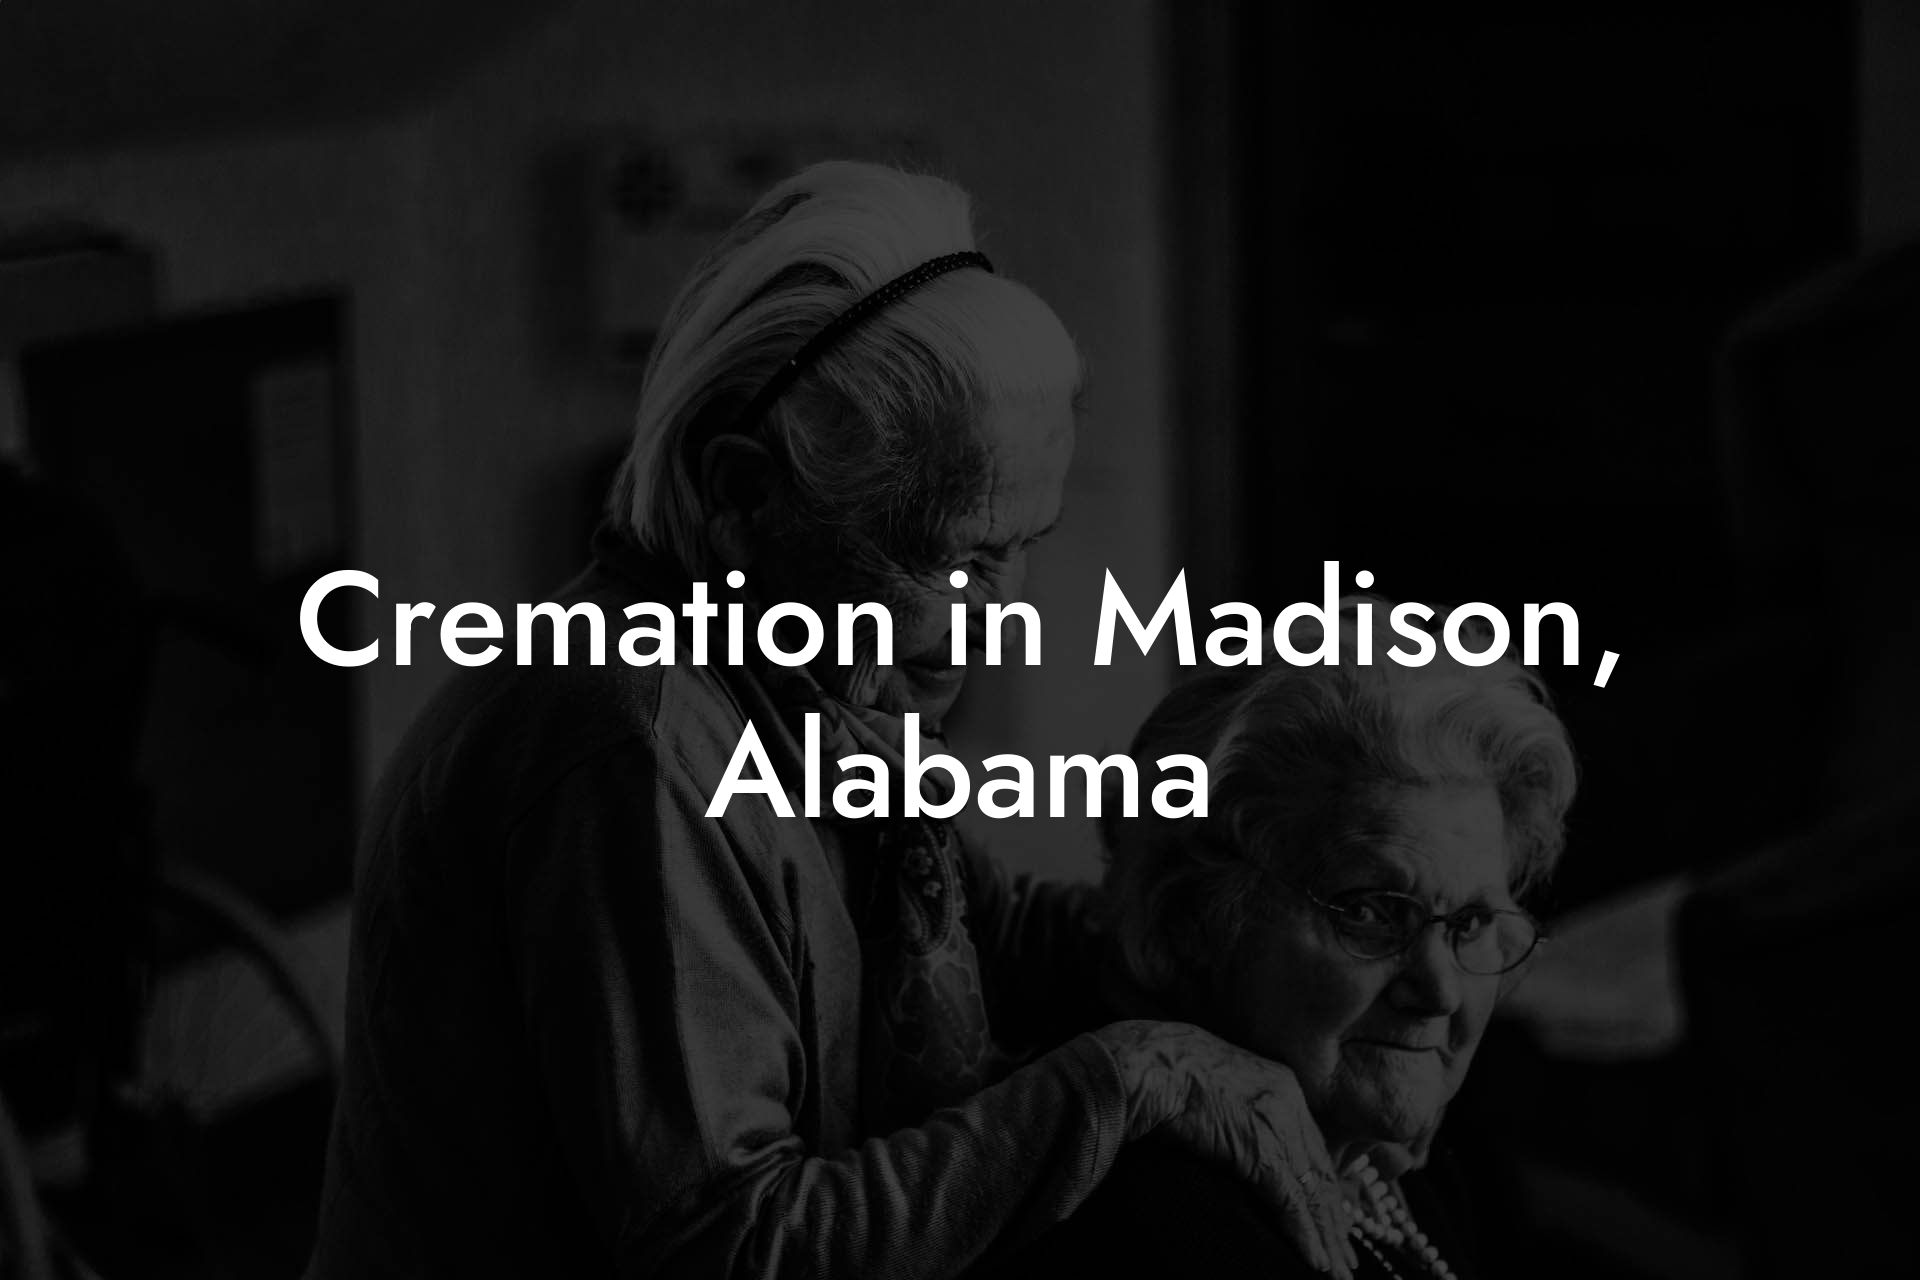 Cremation in Madison, Alabama